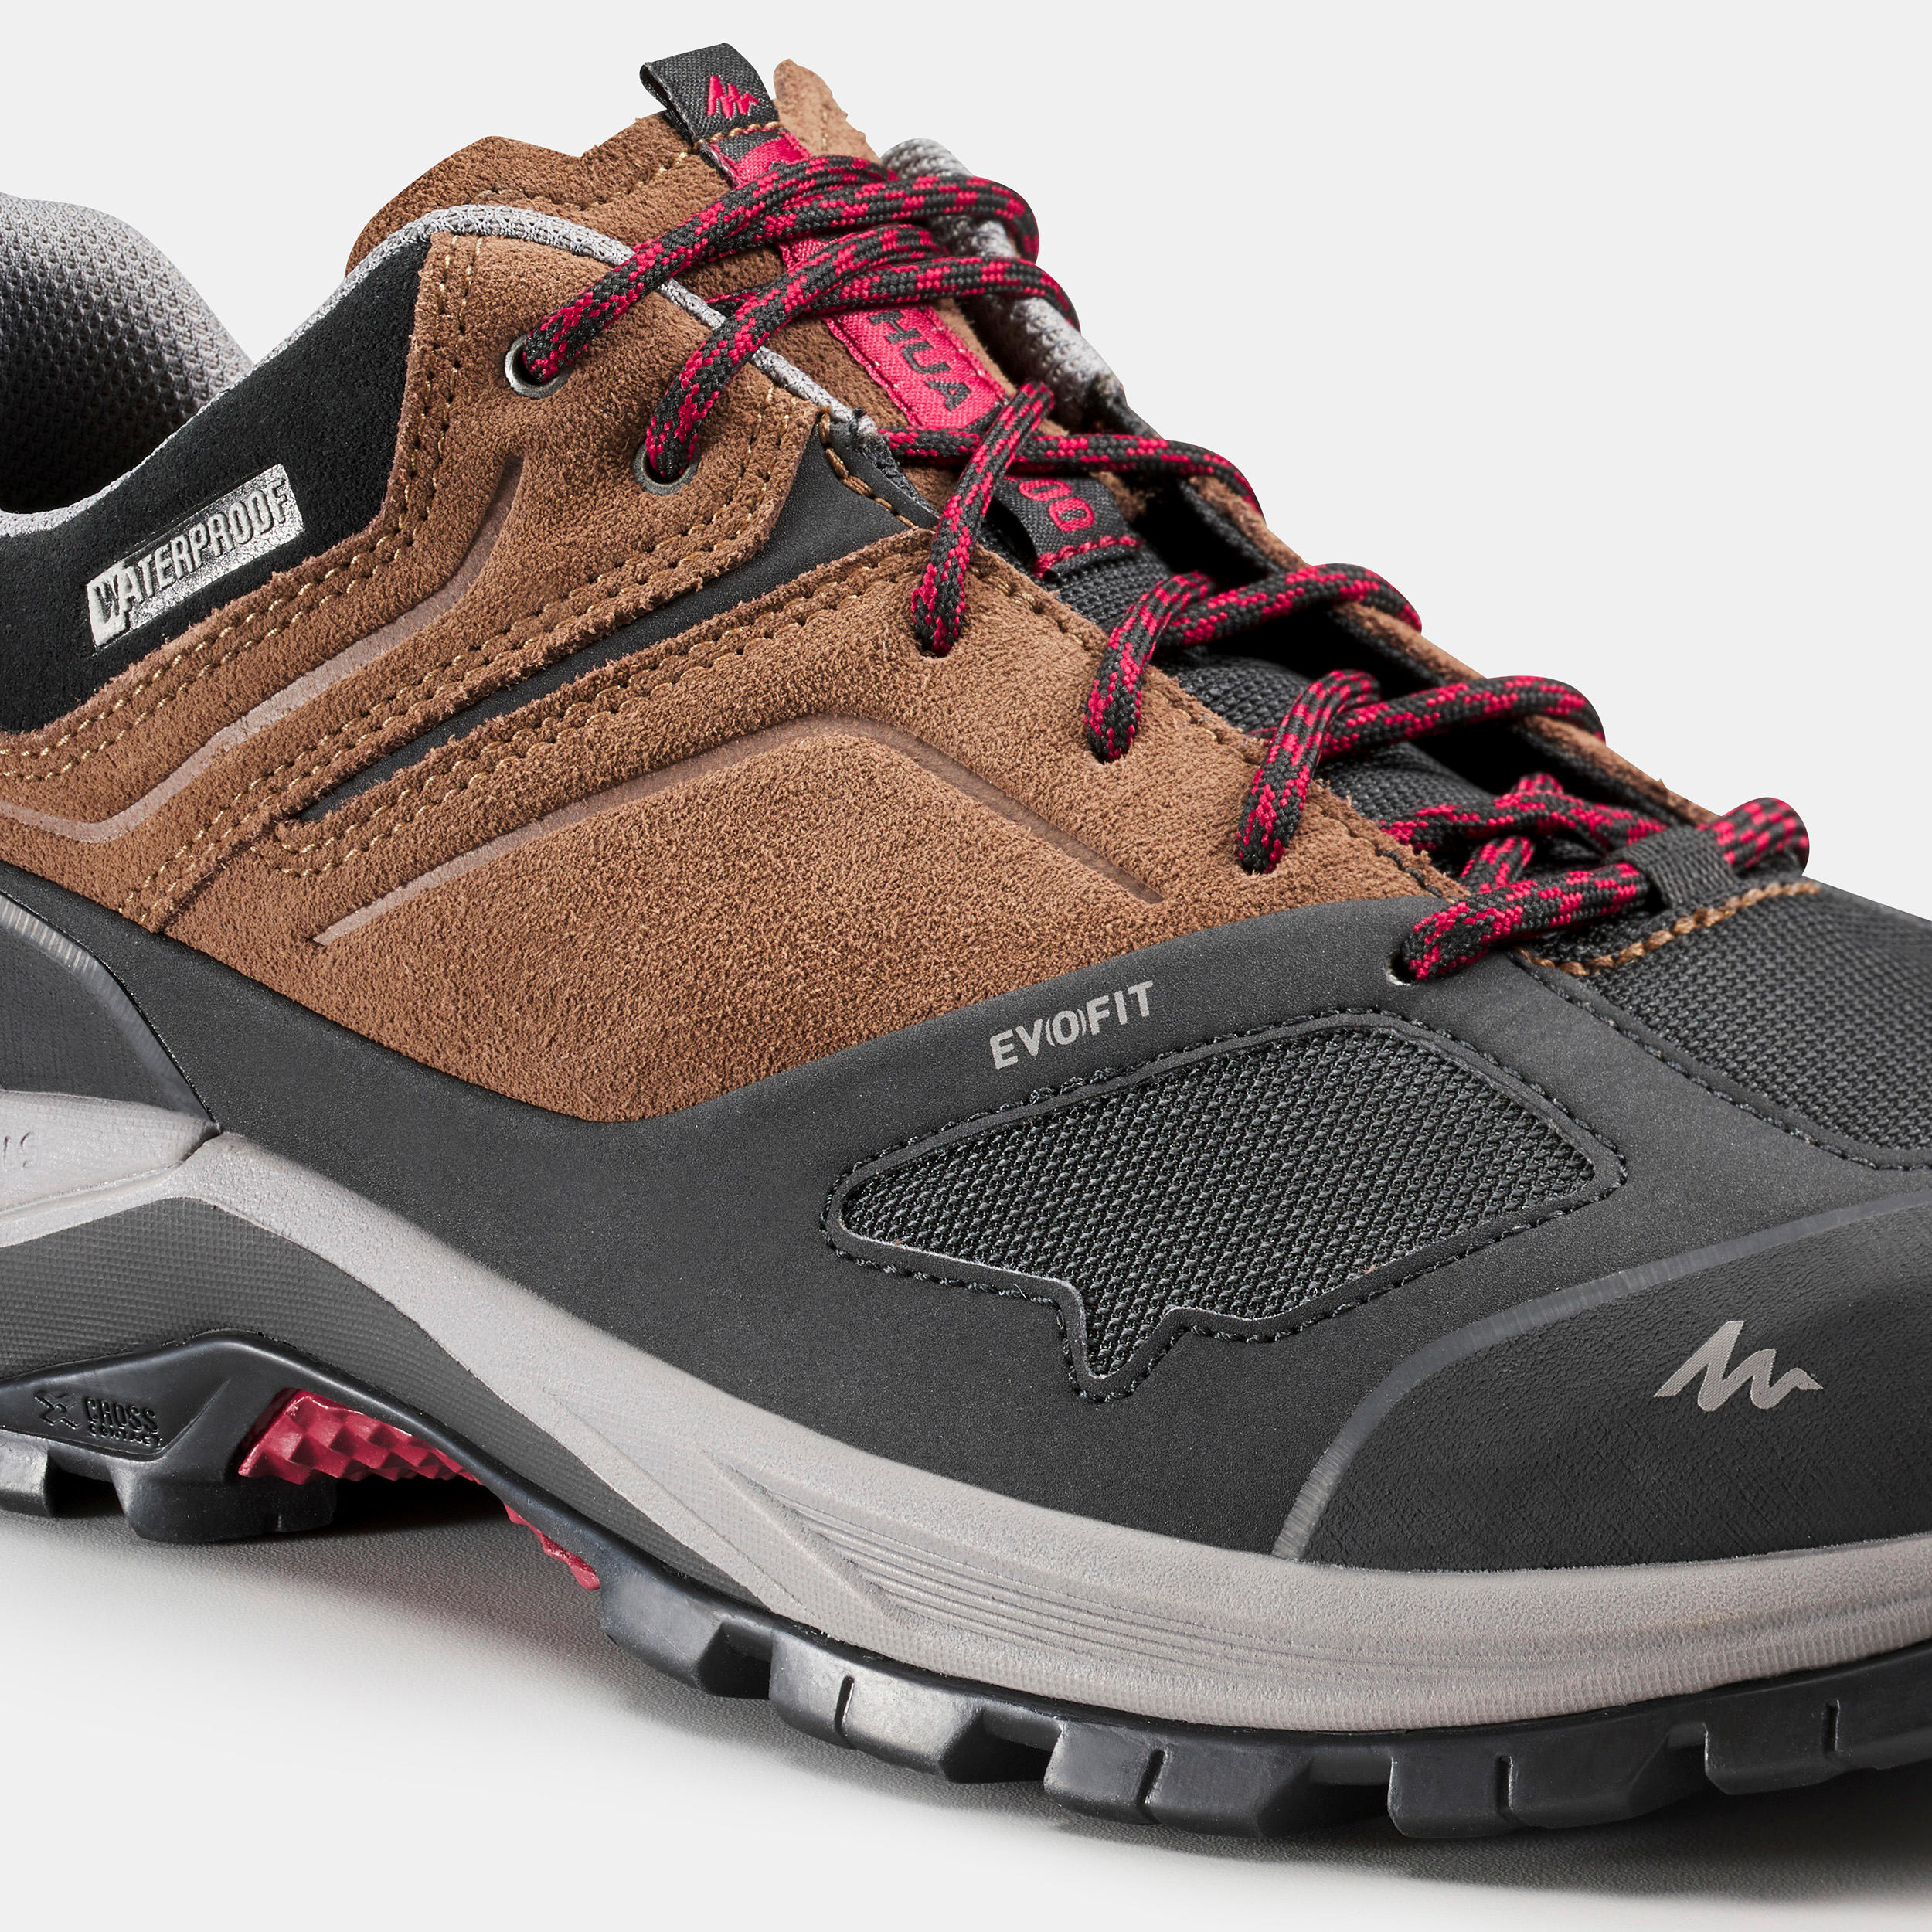 Men's waterproof mountain hiking shoes - MH500 - Brown 6/7